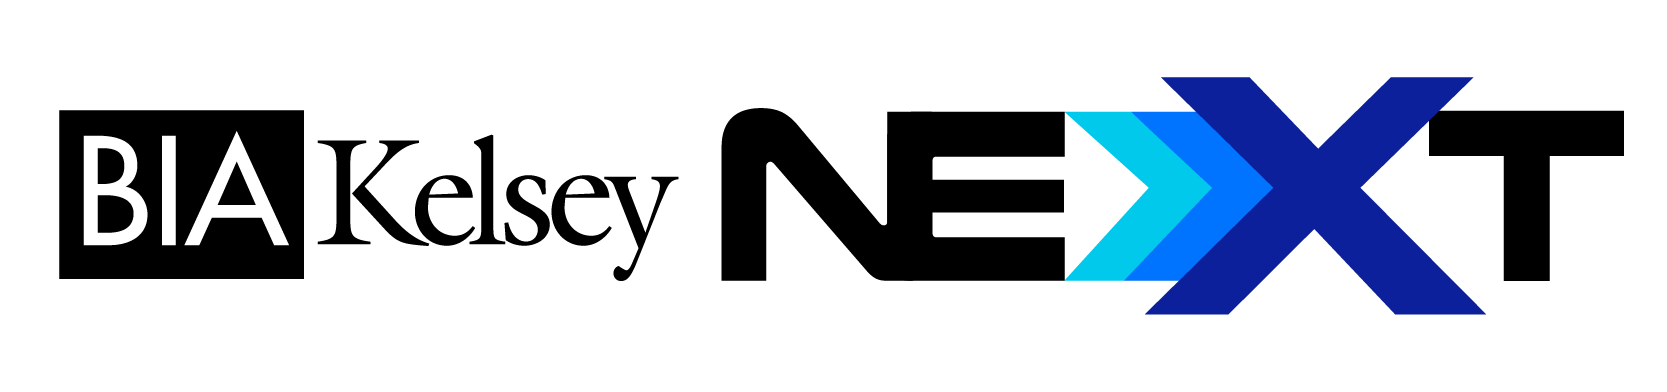 Biak Next 2016 Logo Final 01